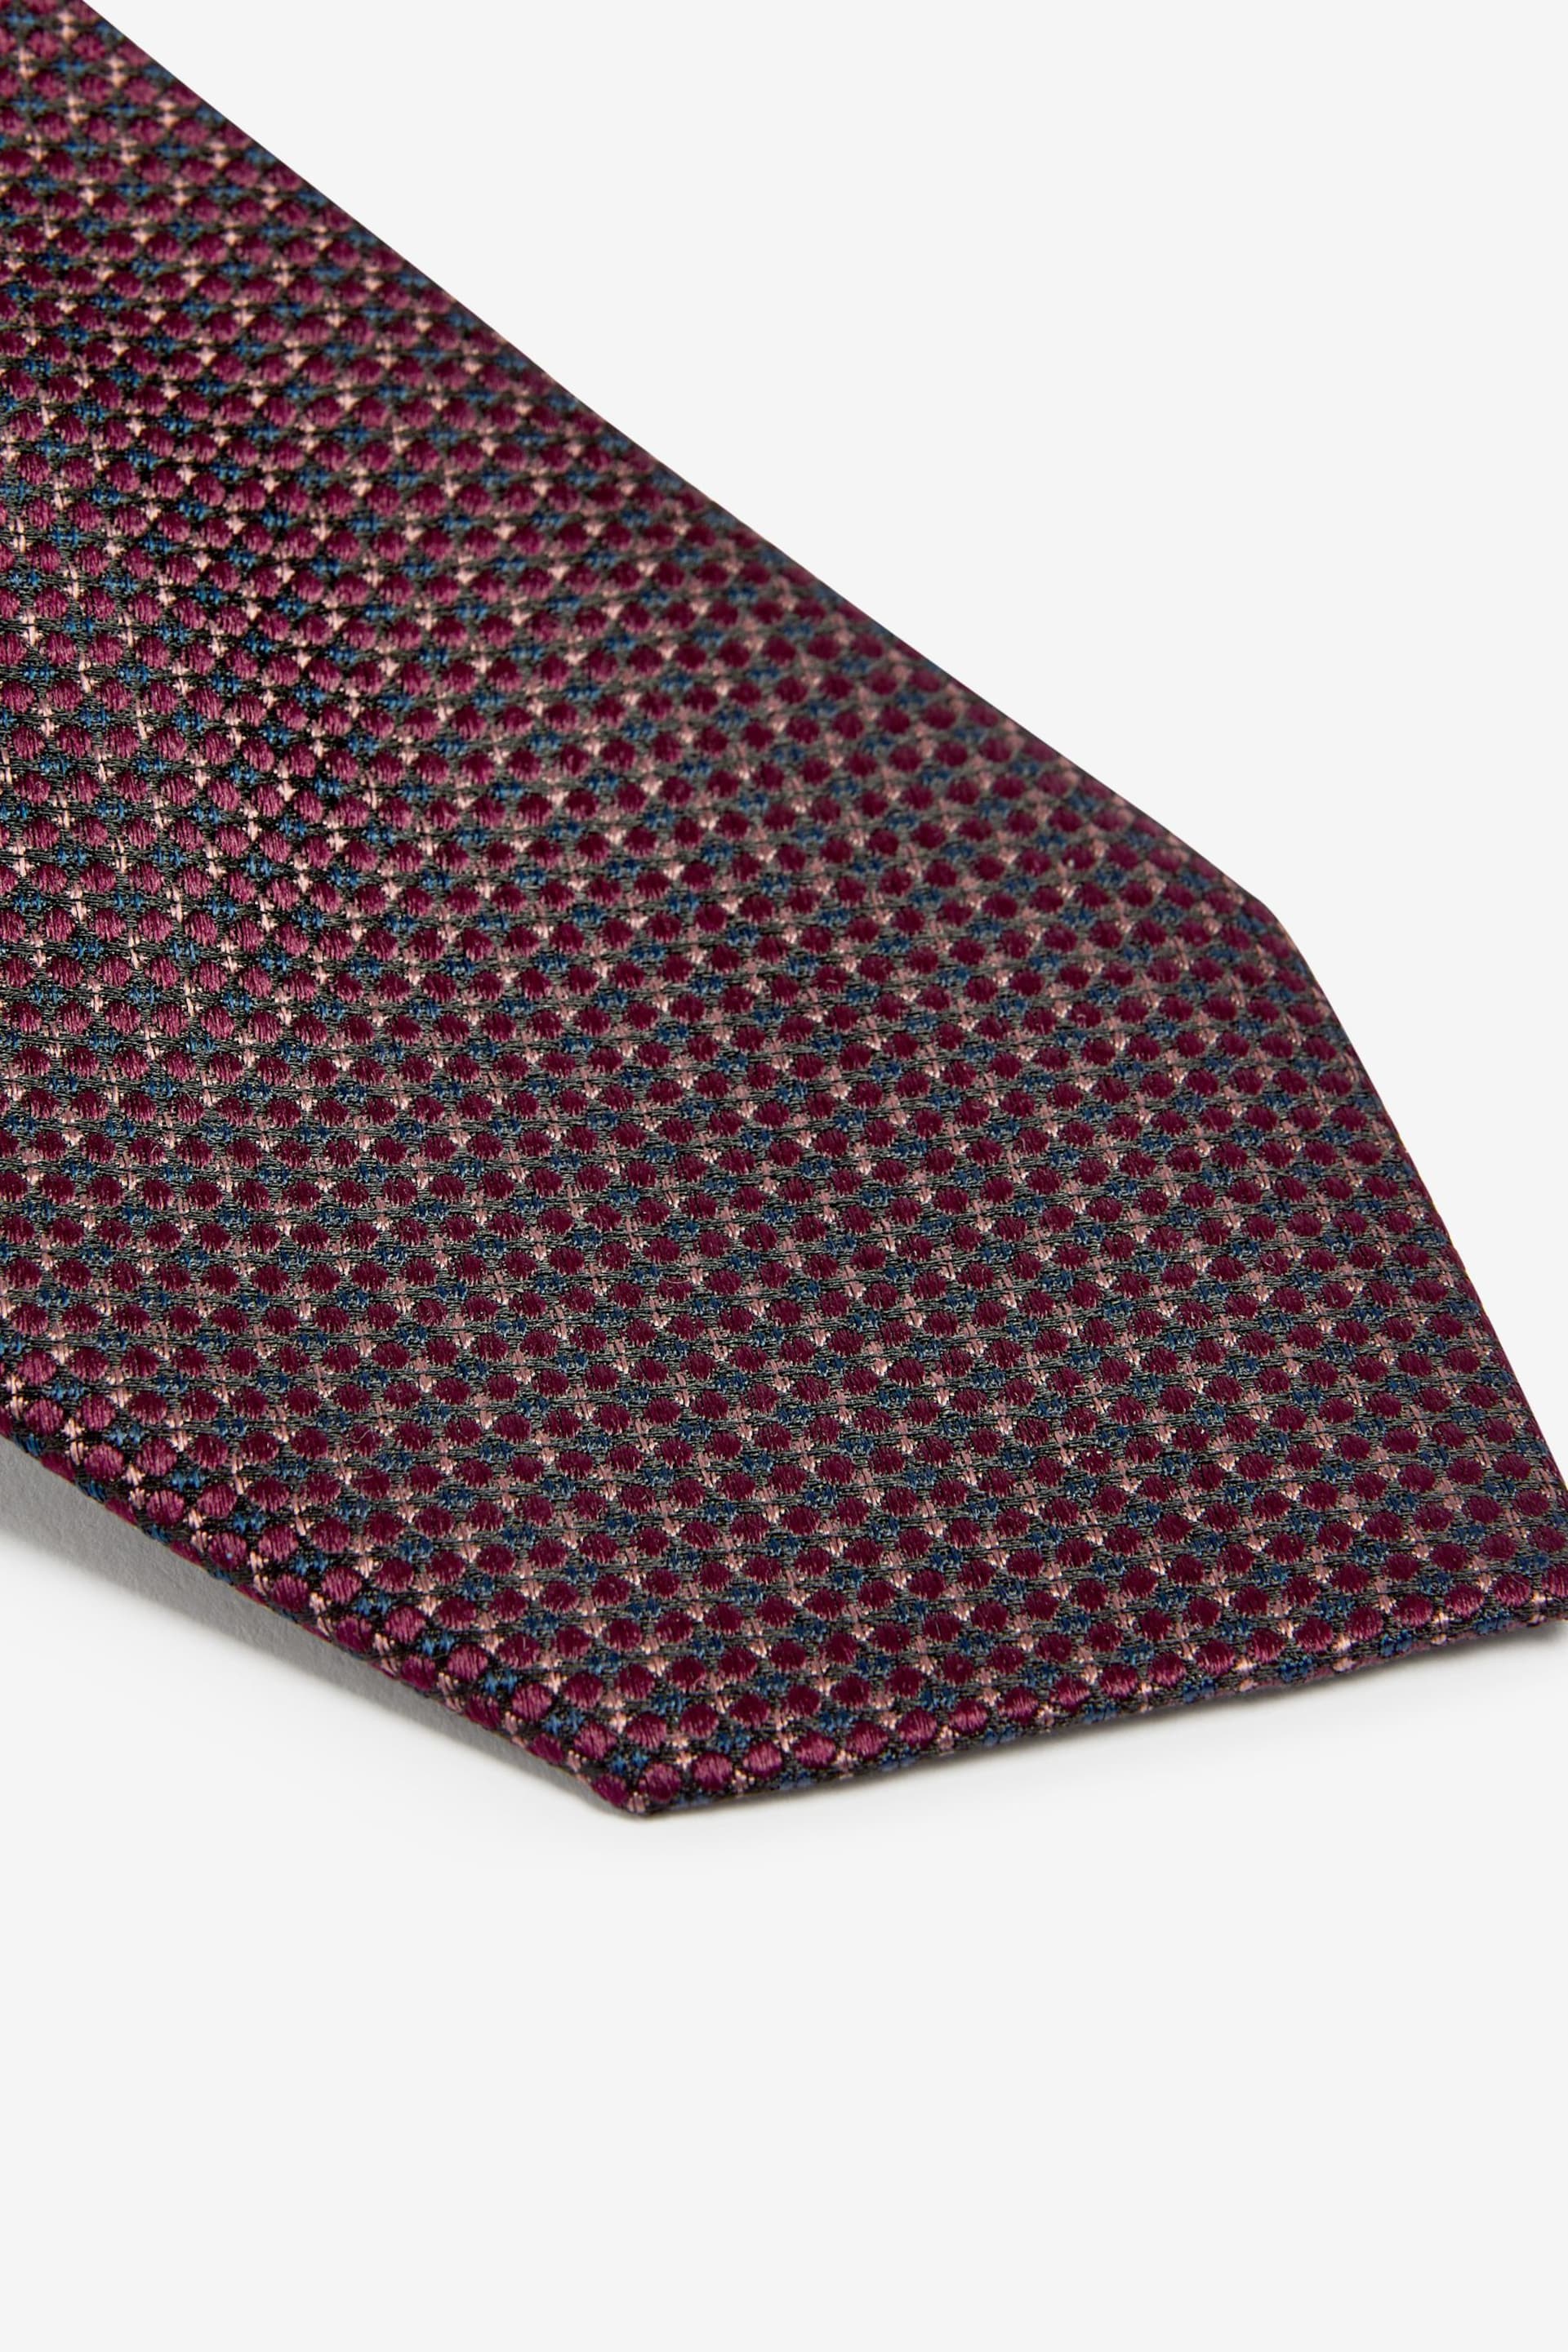 Burgundy Red Textured Silk Tie - Image 2 of 3